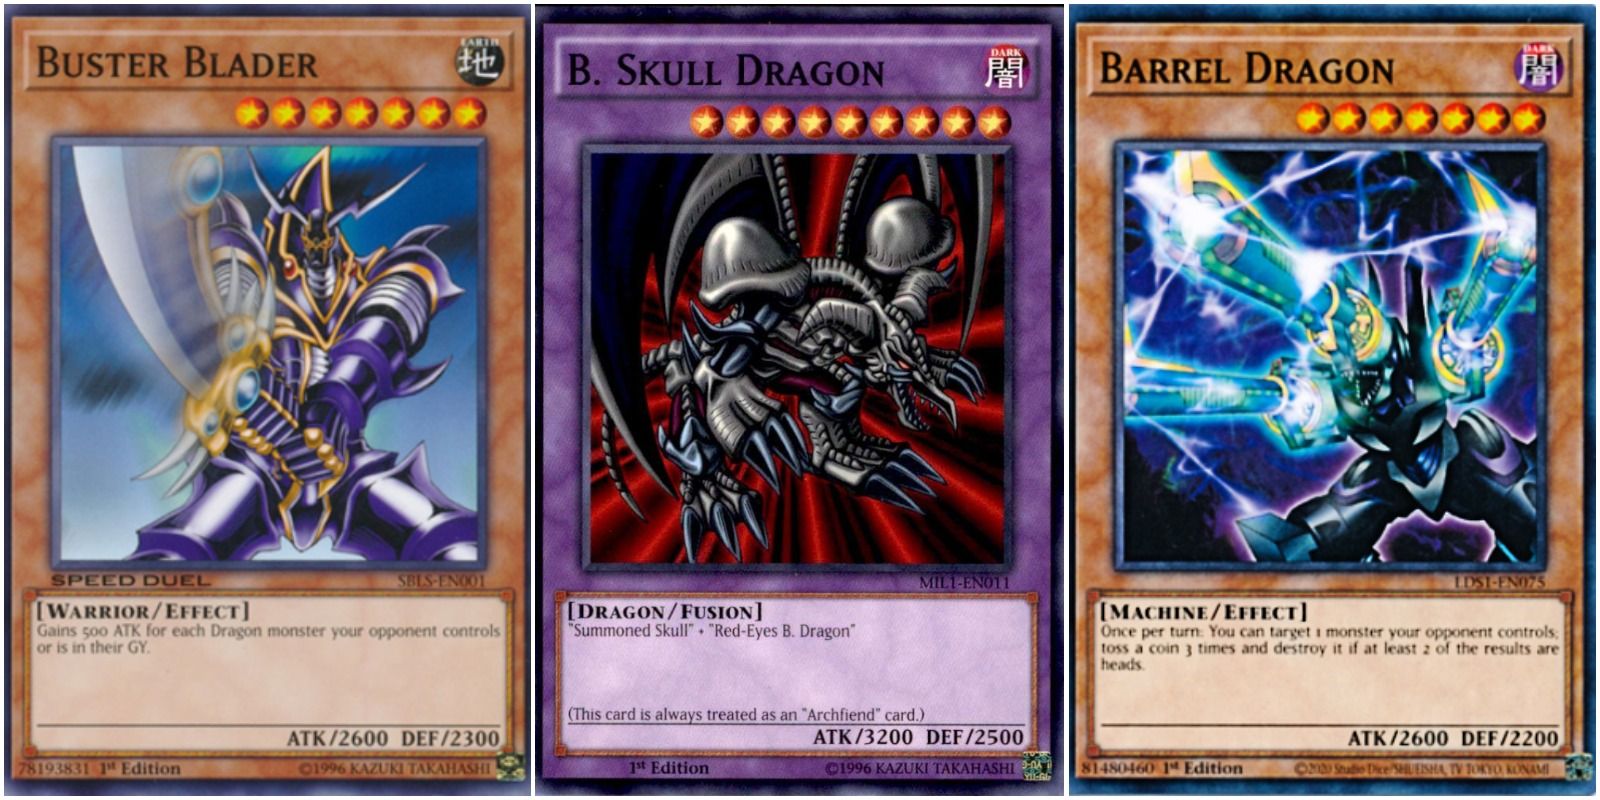 buster blader, black skull dragon, and barrel dragon.